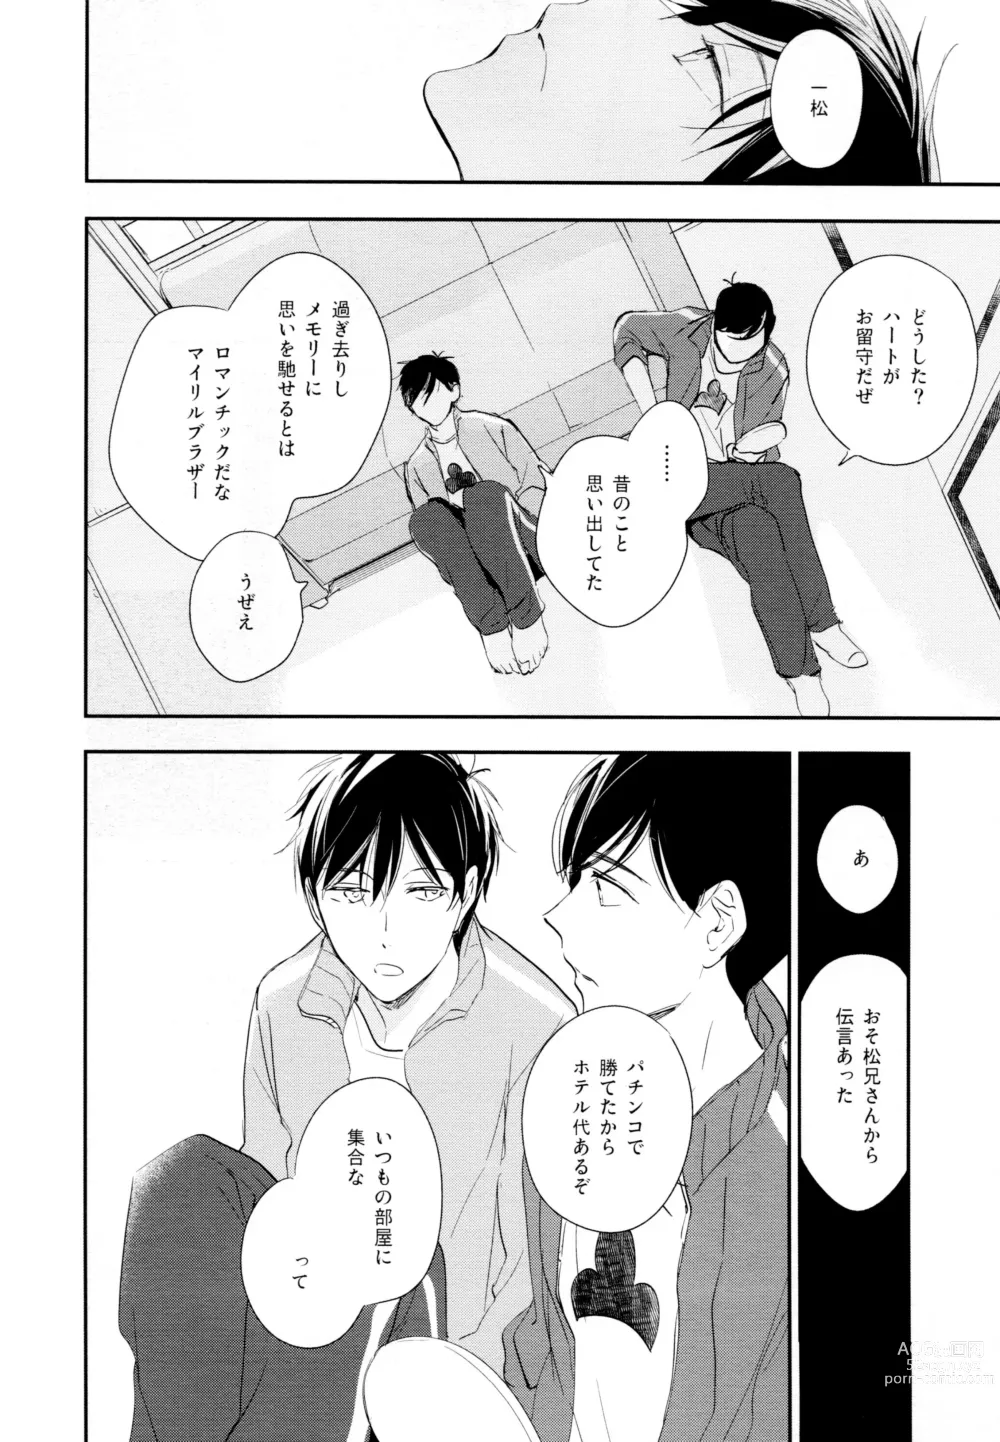 Page 93 of doujinshi Hikari ni Tsuite